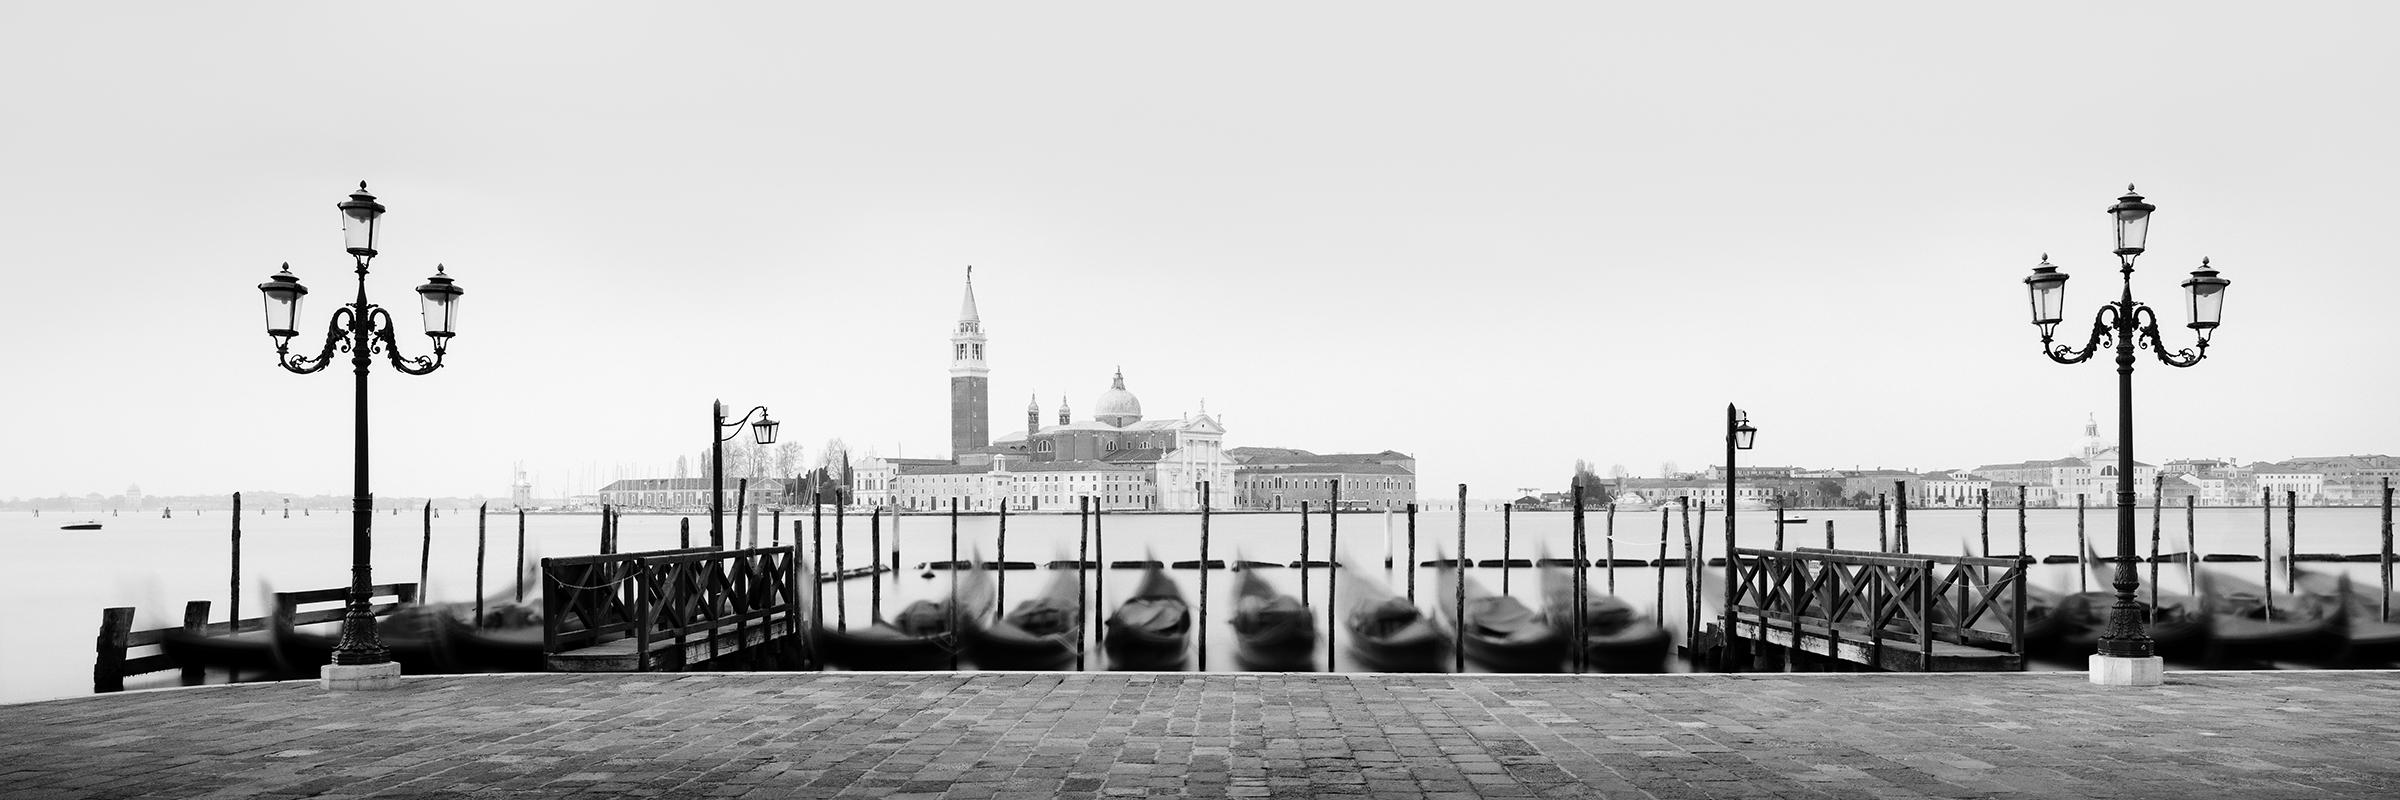 Landscape Photograph Gerald Berghammer - Between the Lights, Venice, panorama en noir et blanc, photographie de paysage urbain.